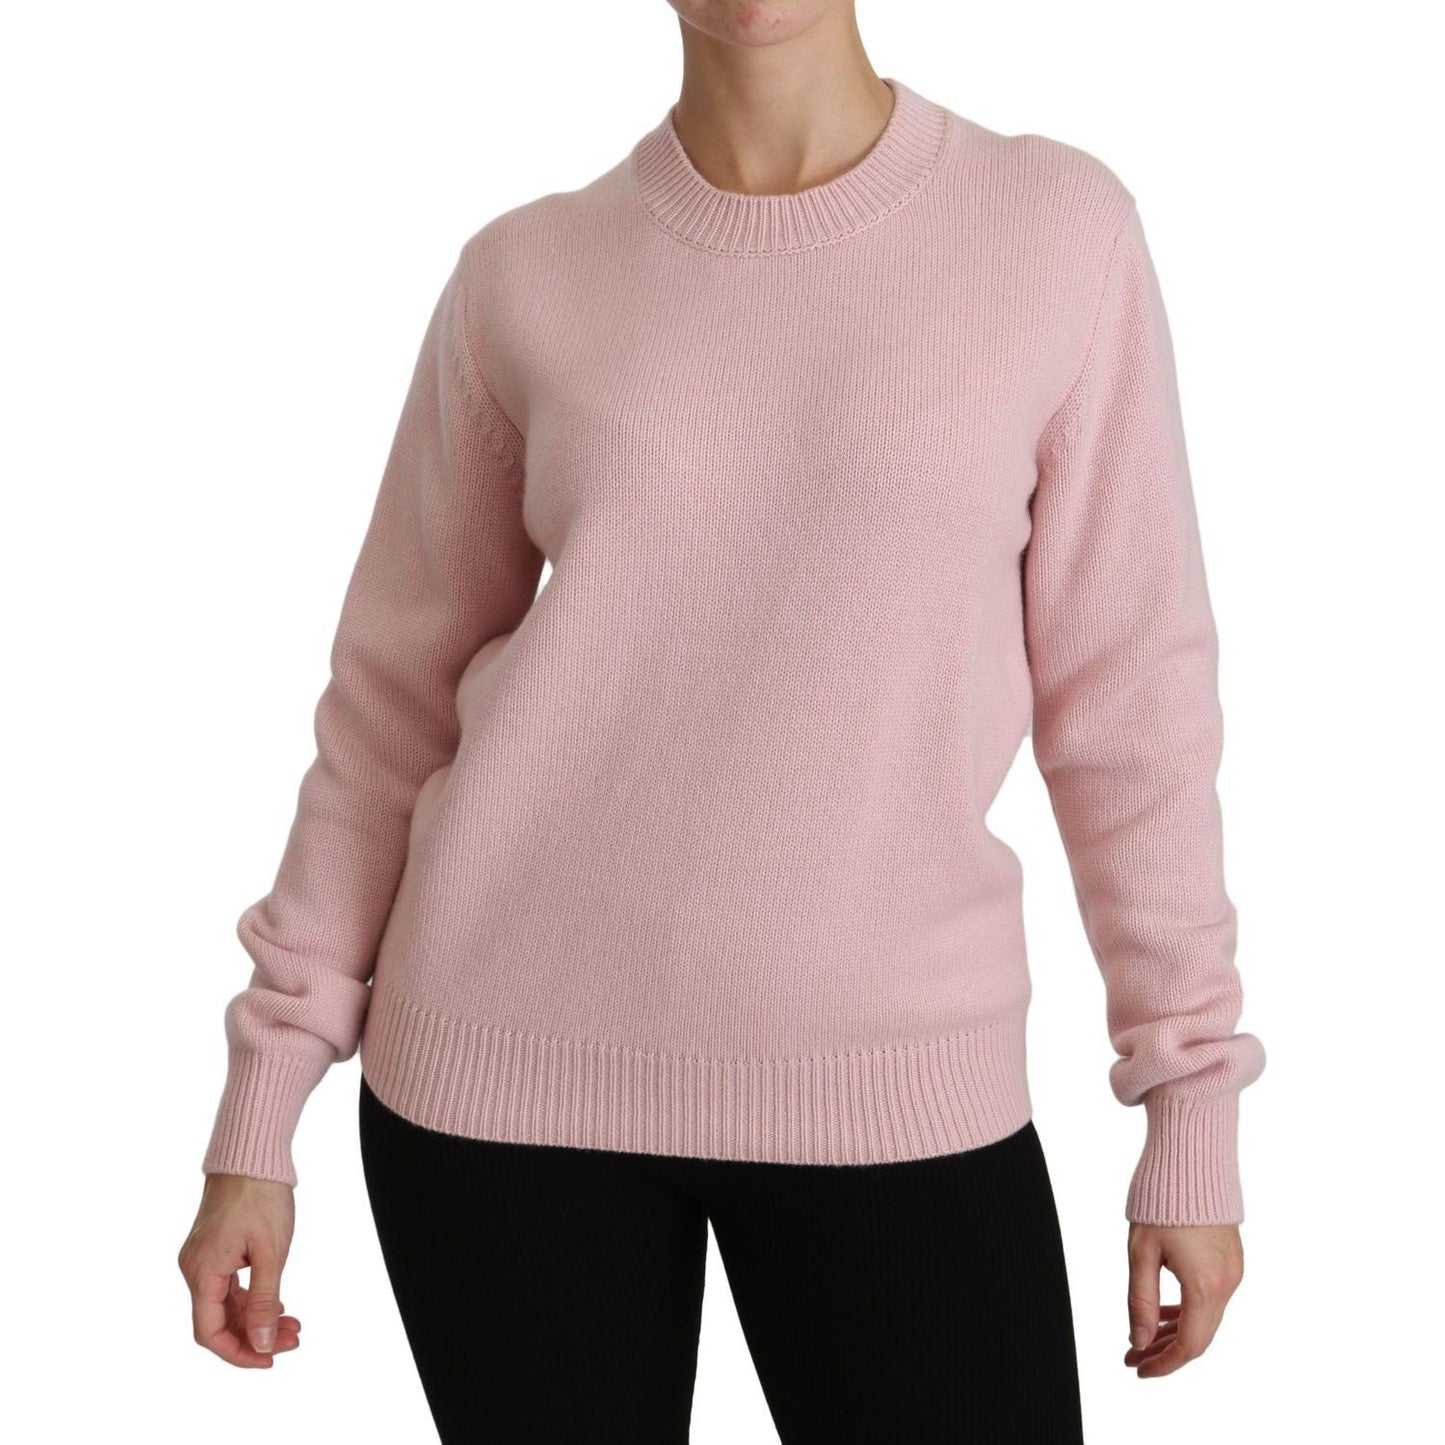 Dolce & Gabbana Cashmere-Blend Pink Crew Neck Sweater pink-crew-neck-cashmere-pullover-sweater IMG_2748-1-scaled-fa009b2a-5b7.jpg